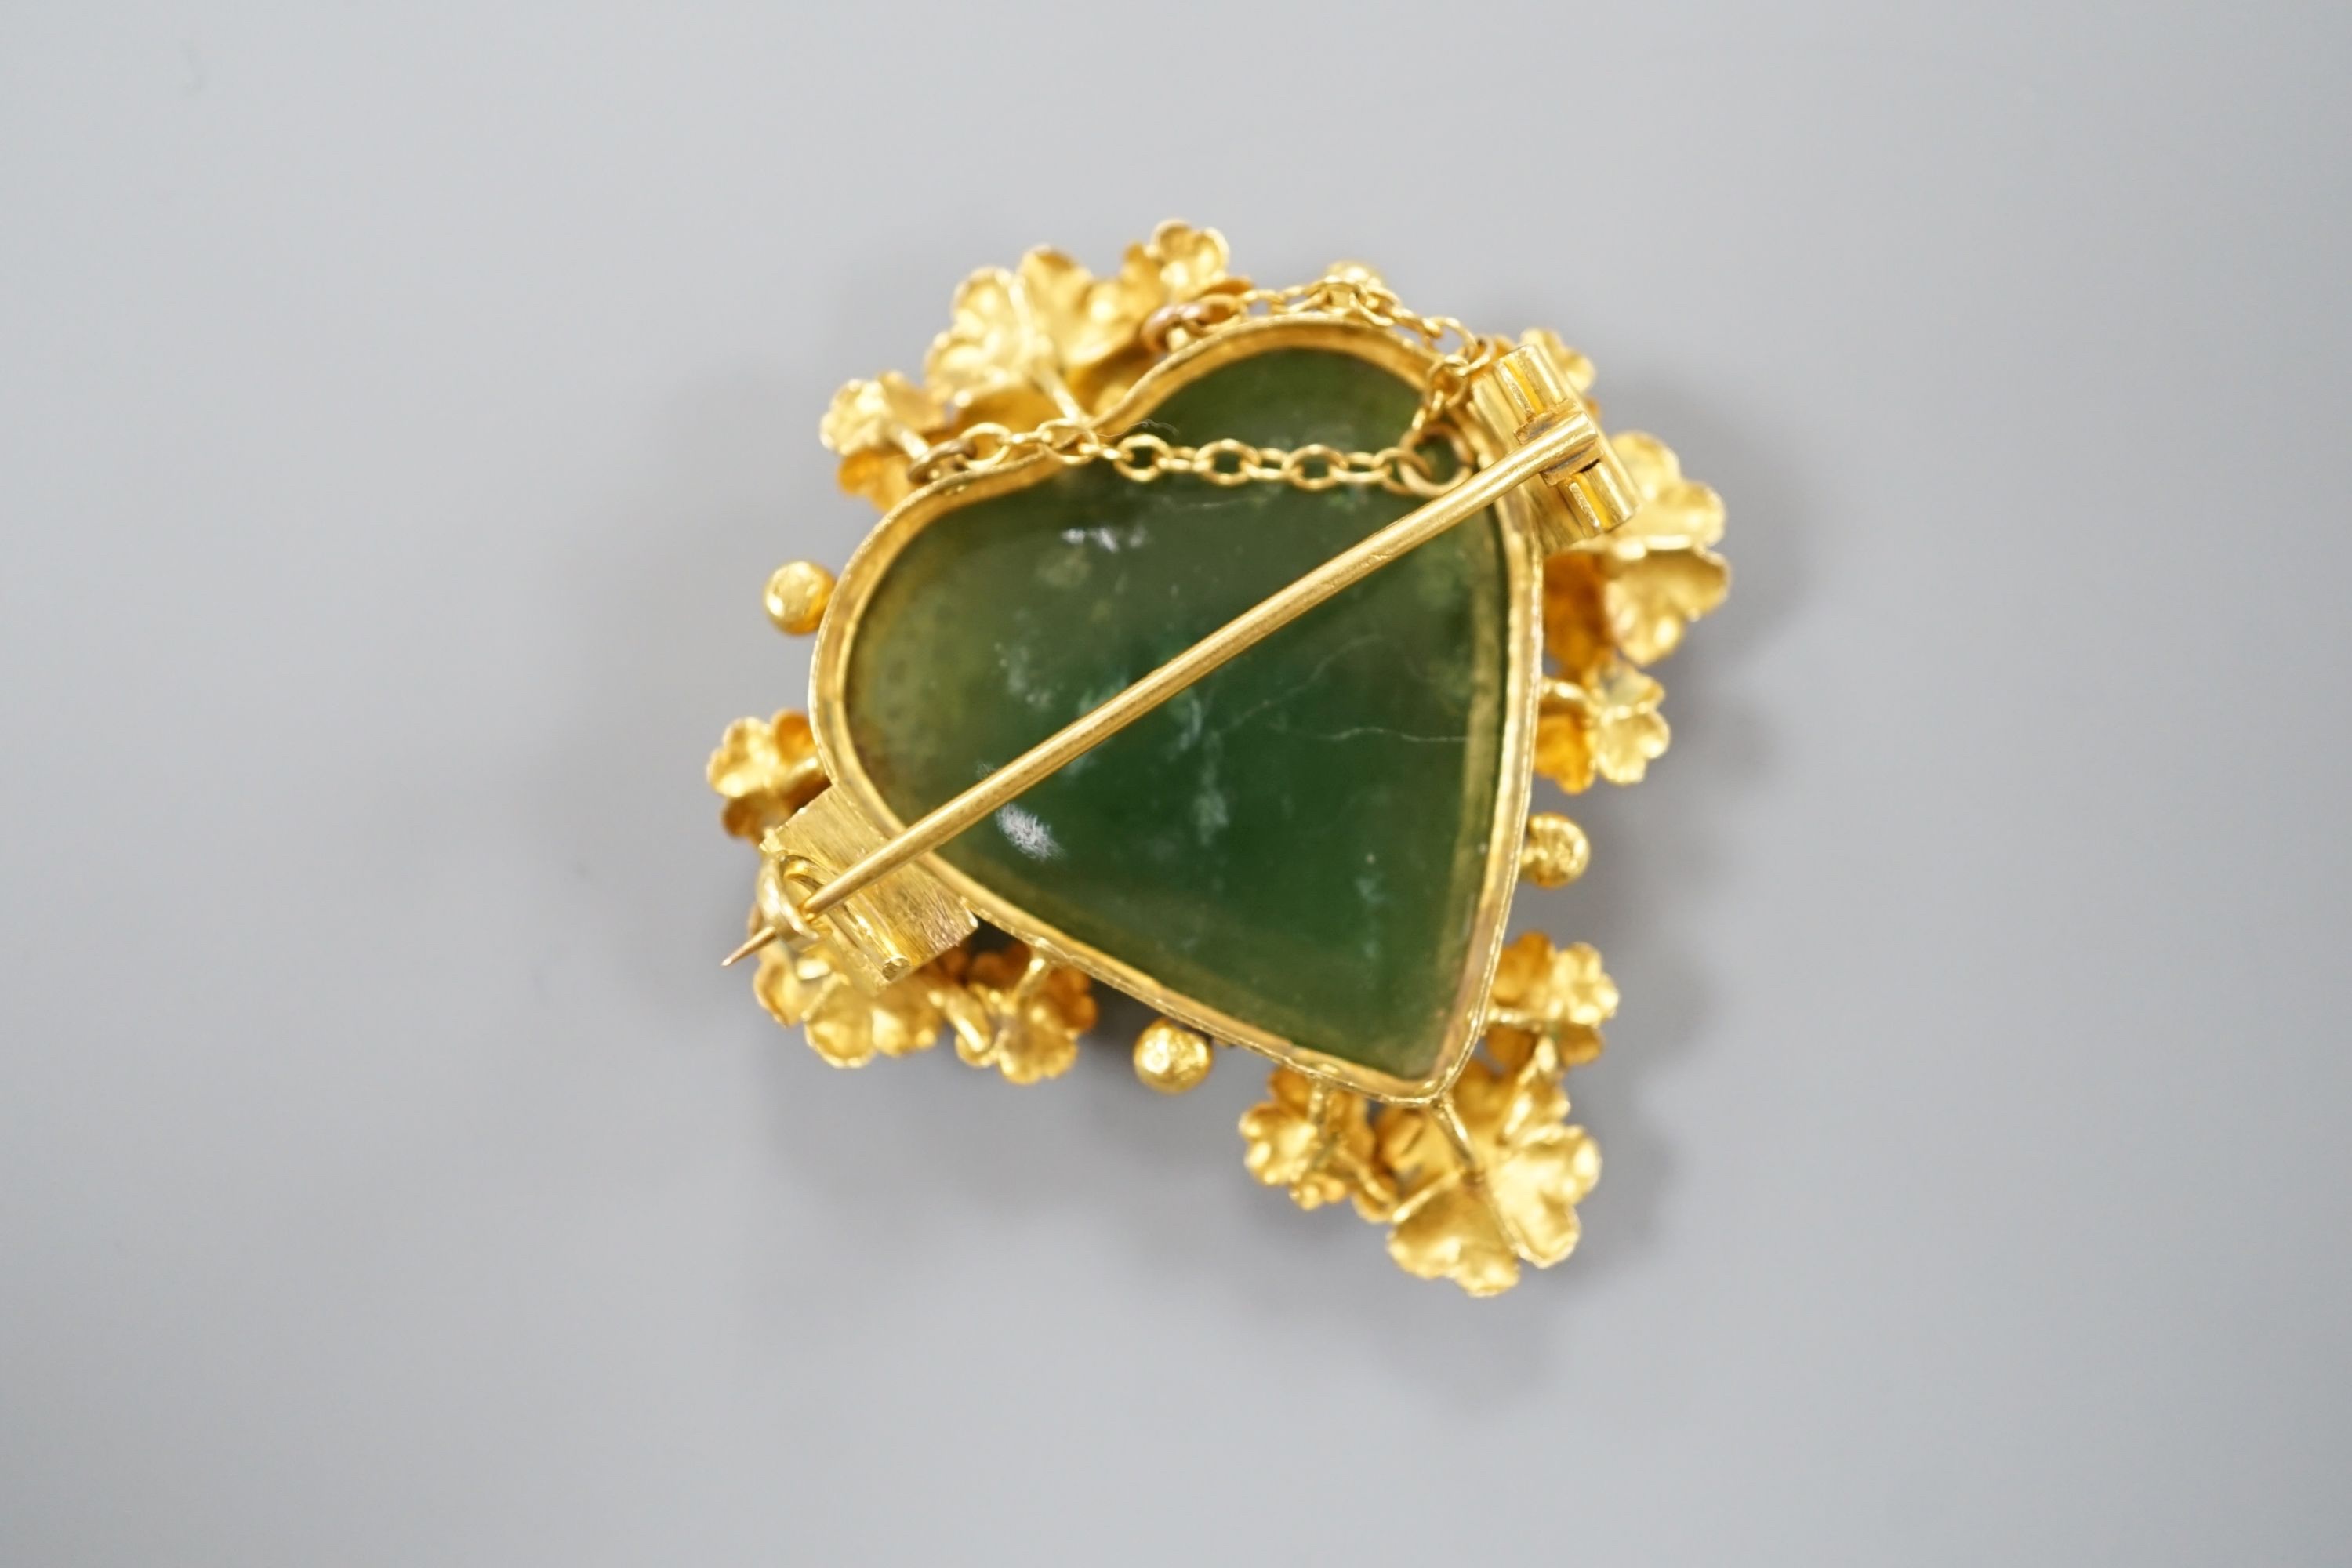 A yellow metal mounted nephrite heart shaped brooch, 41mm, gross weight 11.9 grams.